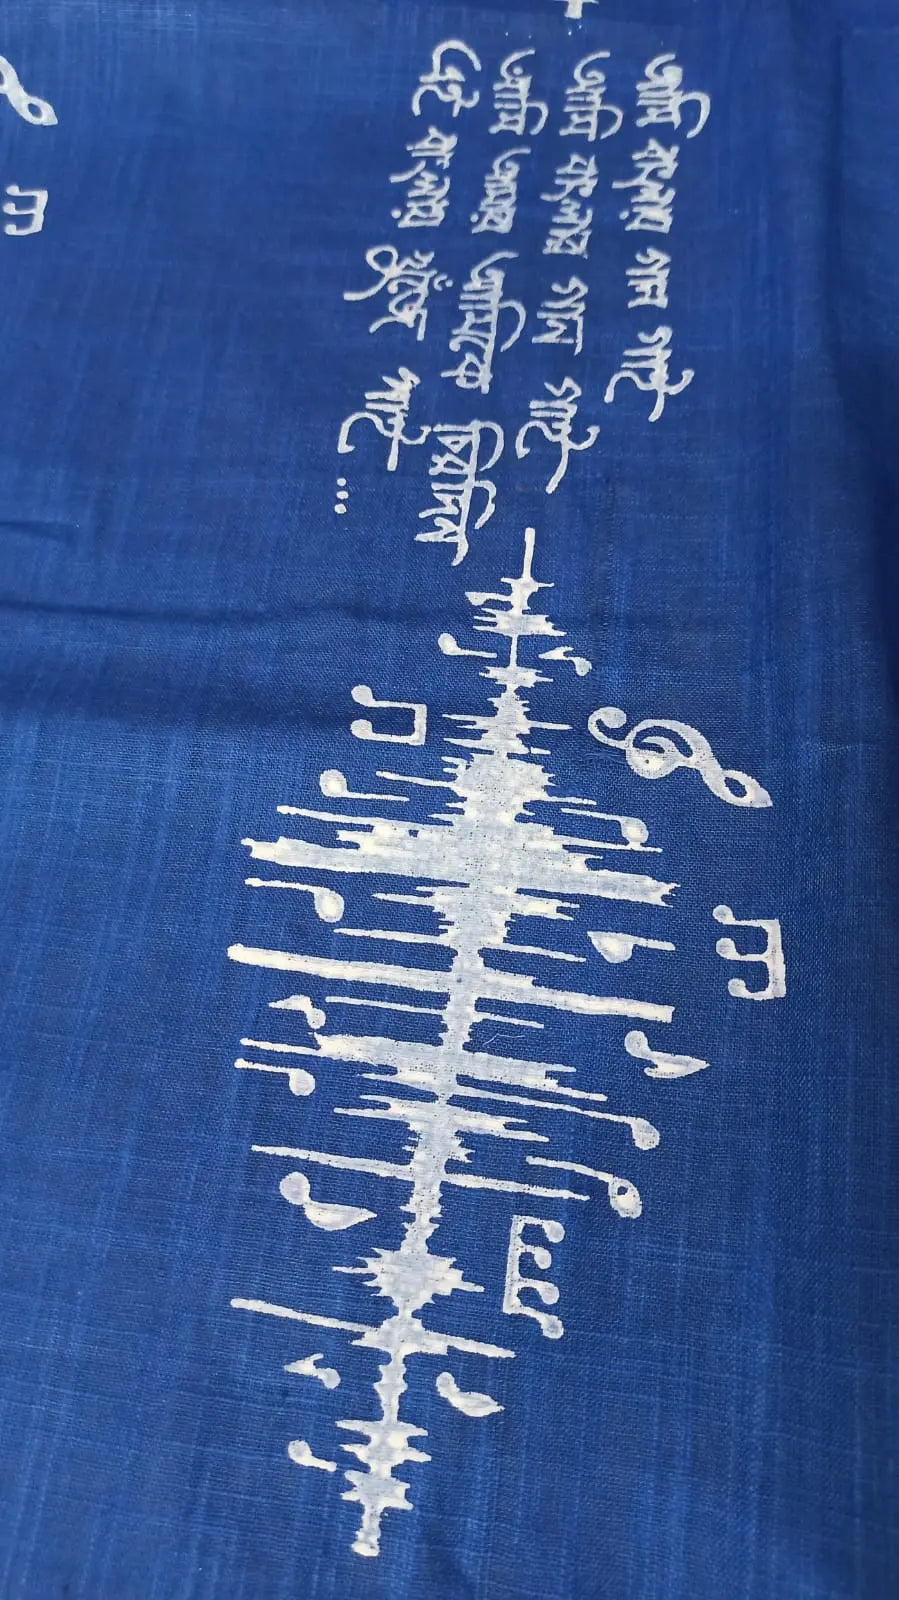 Bengali script on saree Putul's fashion